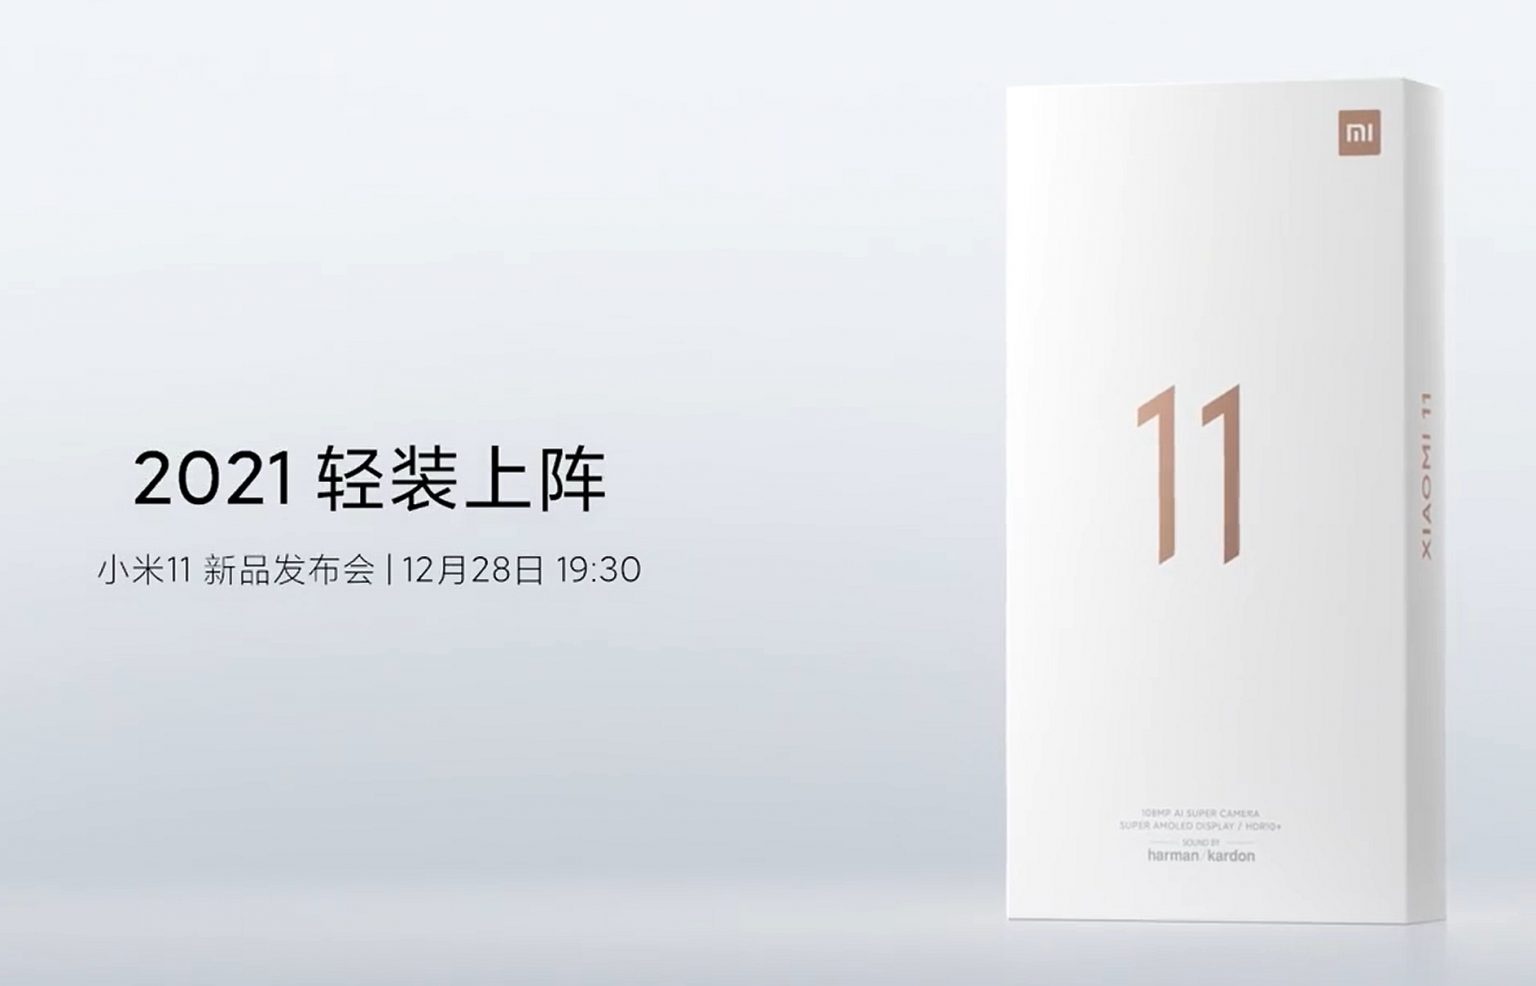 Mỉa mai iPhone 12, Xiaomi cũng bỏ củ sạc - Ảnh 1.